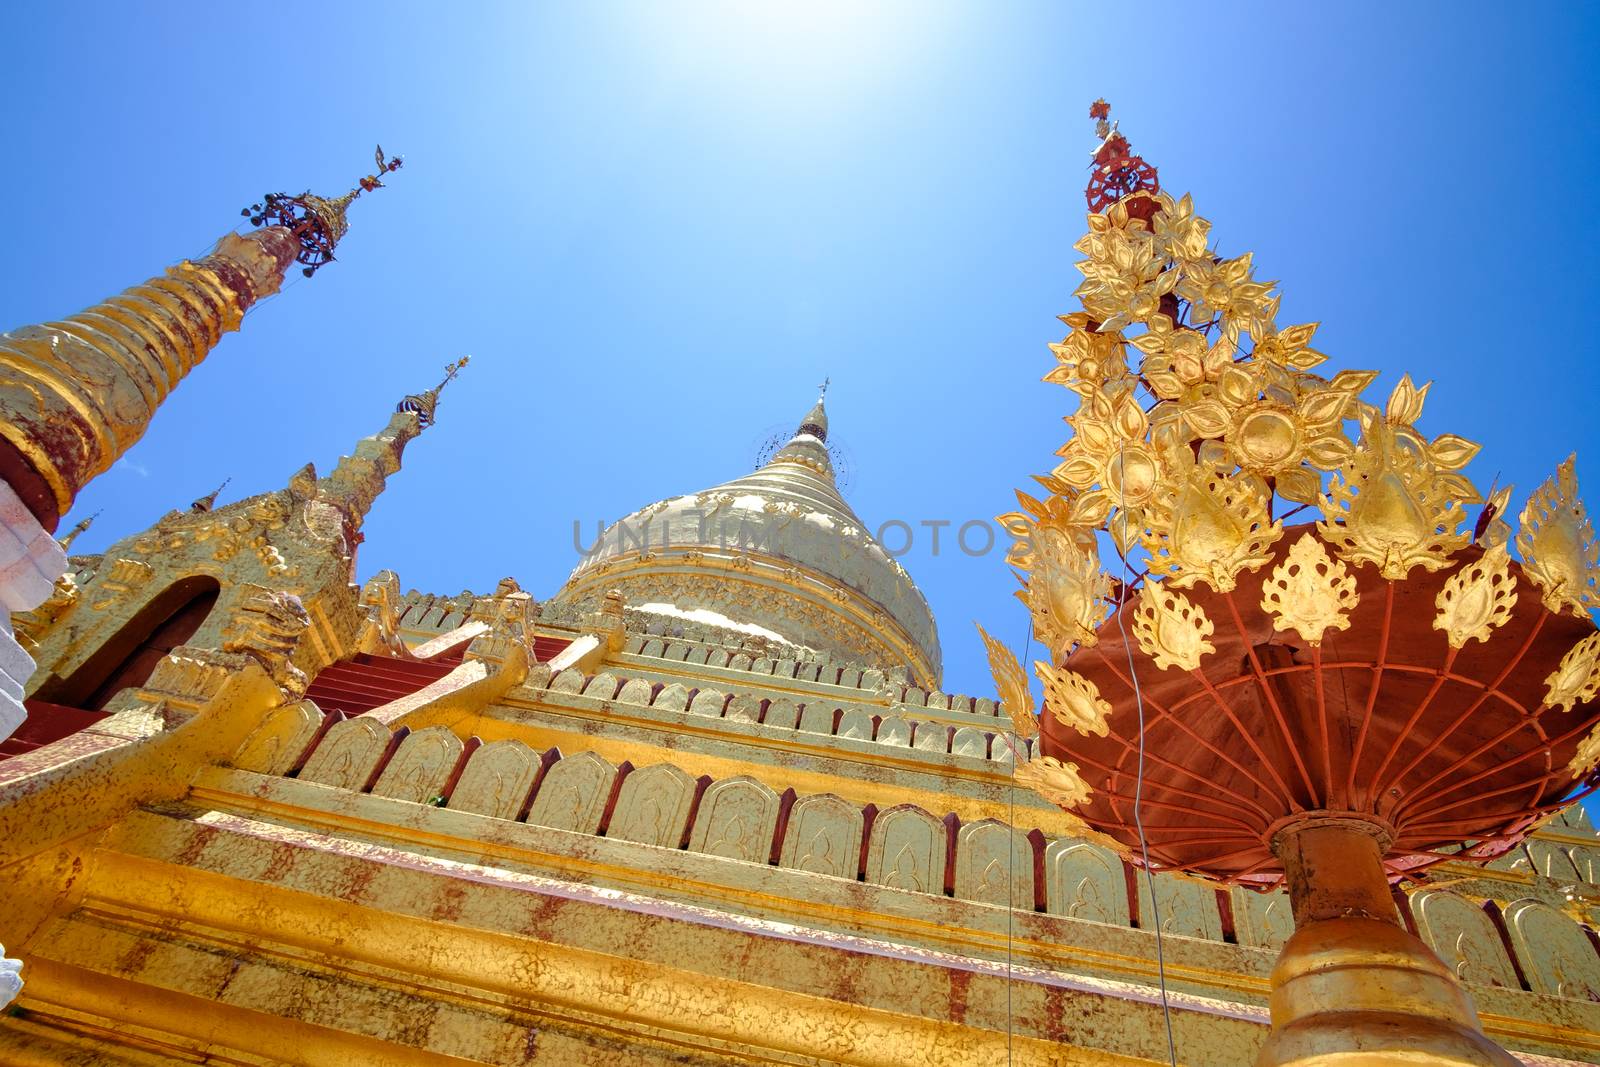 Detail view of golden Shwezigon pagoda in Bagan, Myanmar by martinm303